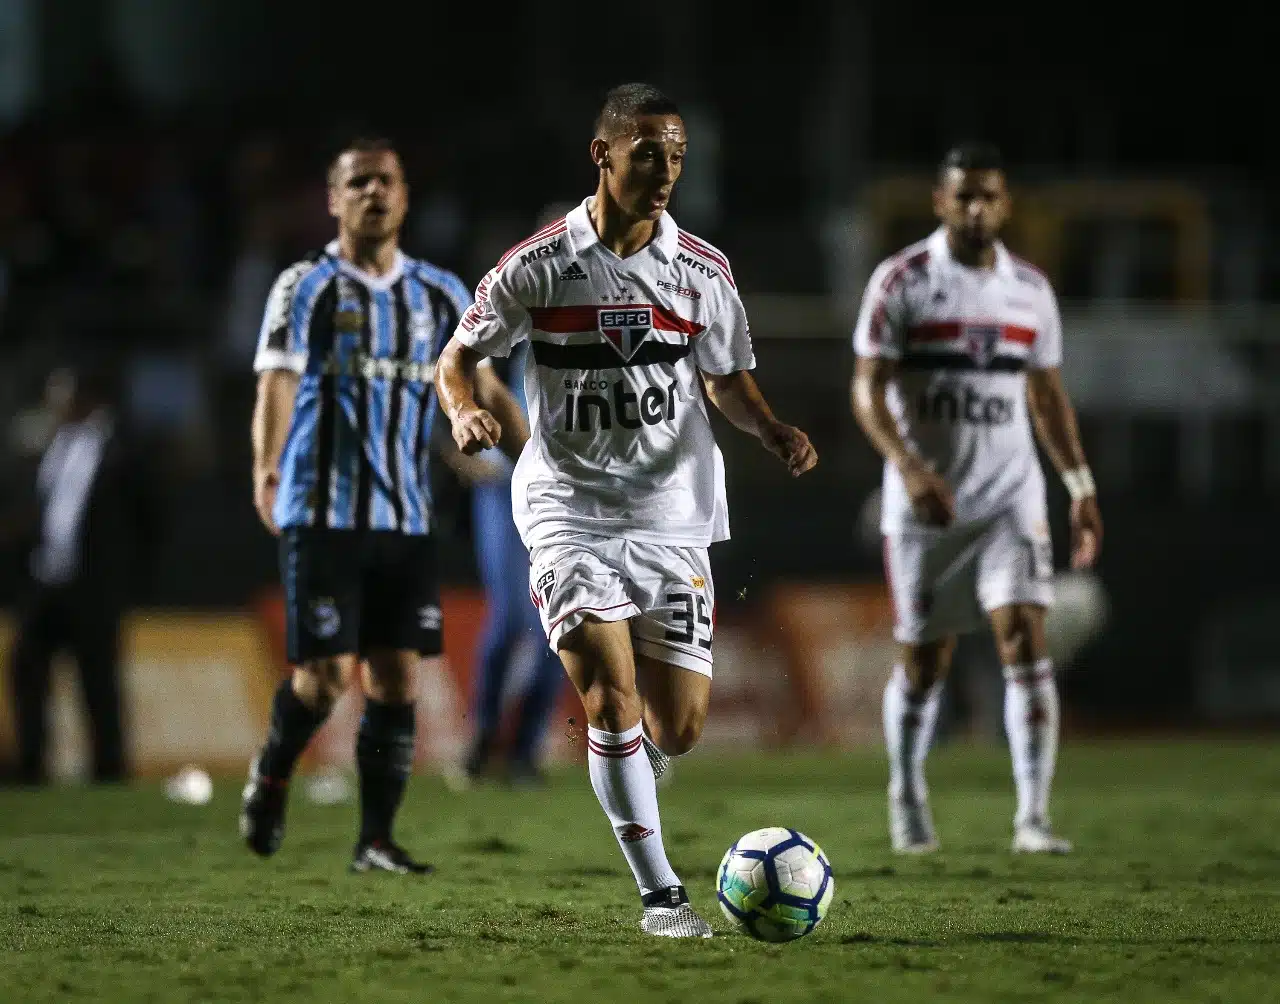 Antony contra o Grêmio